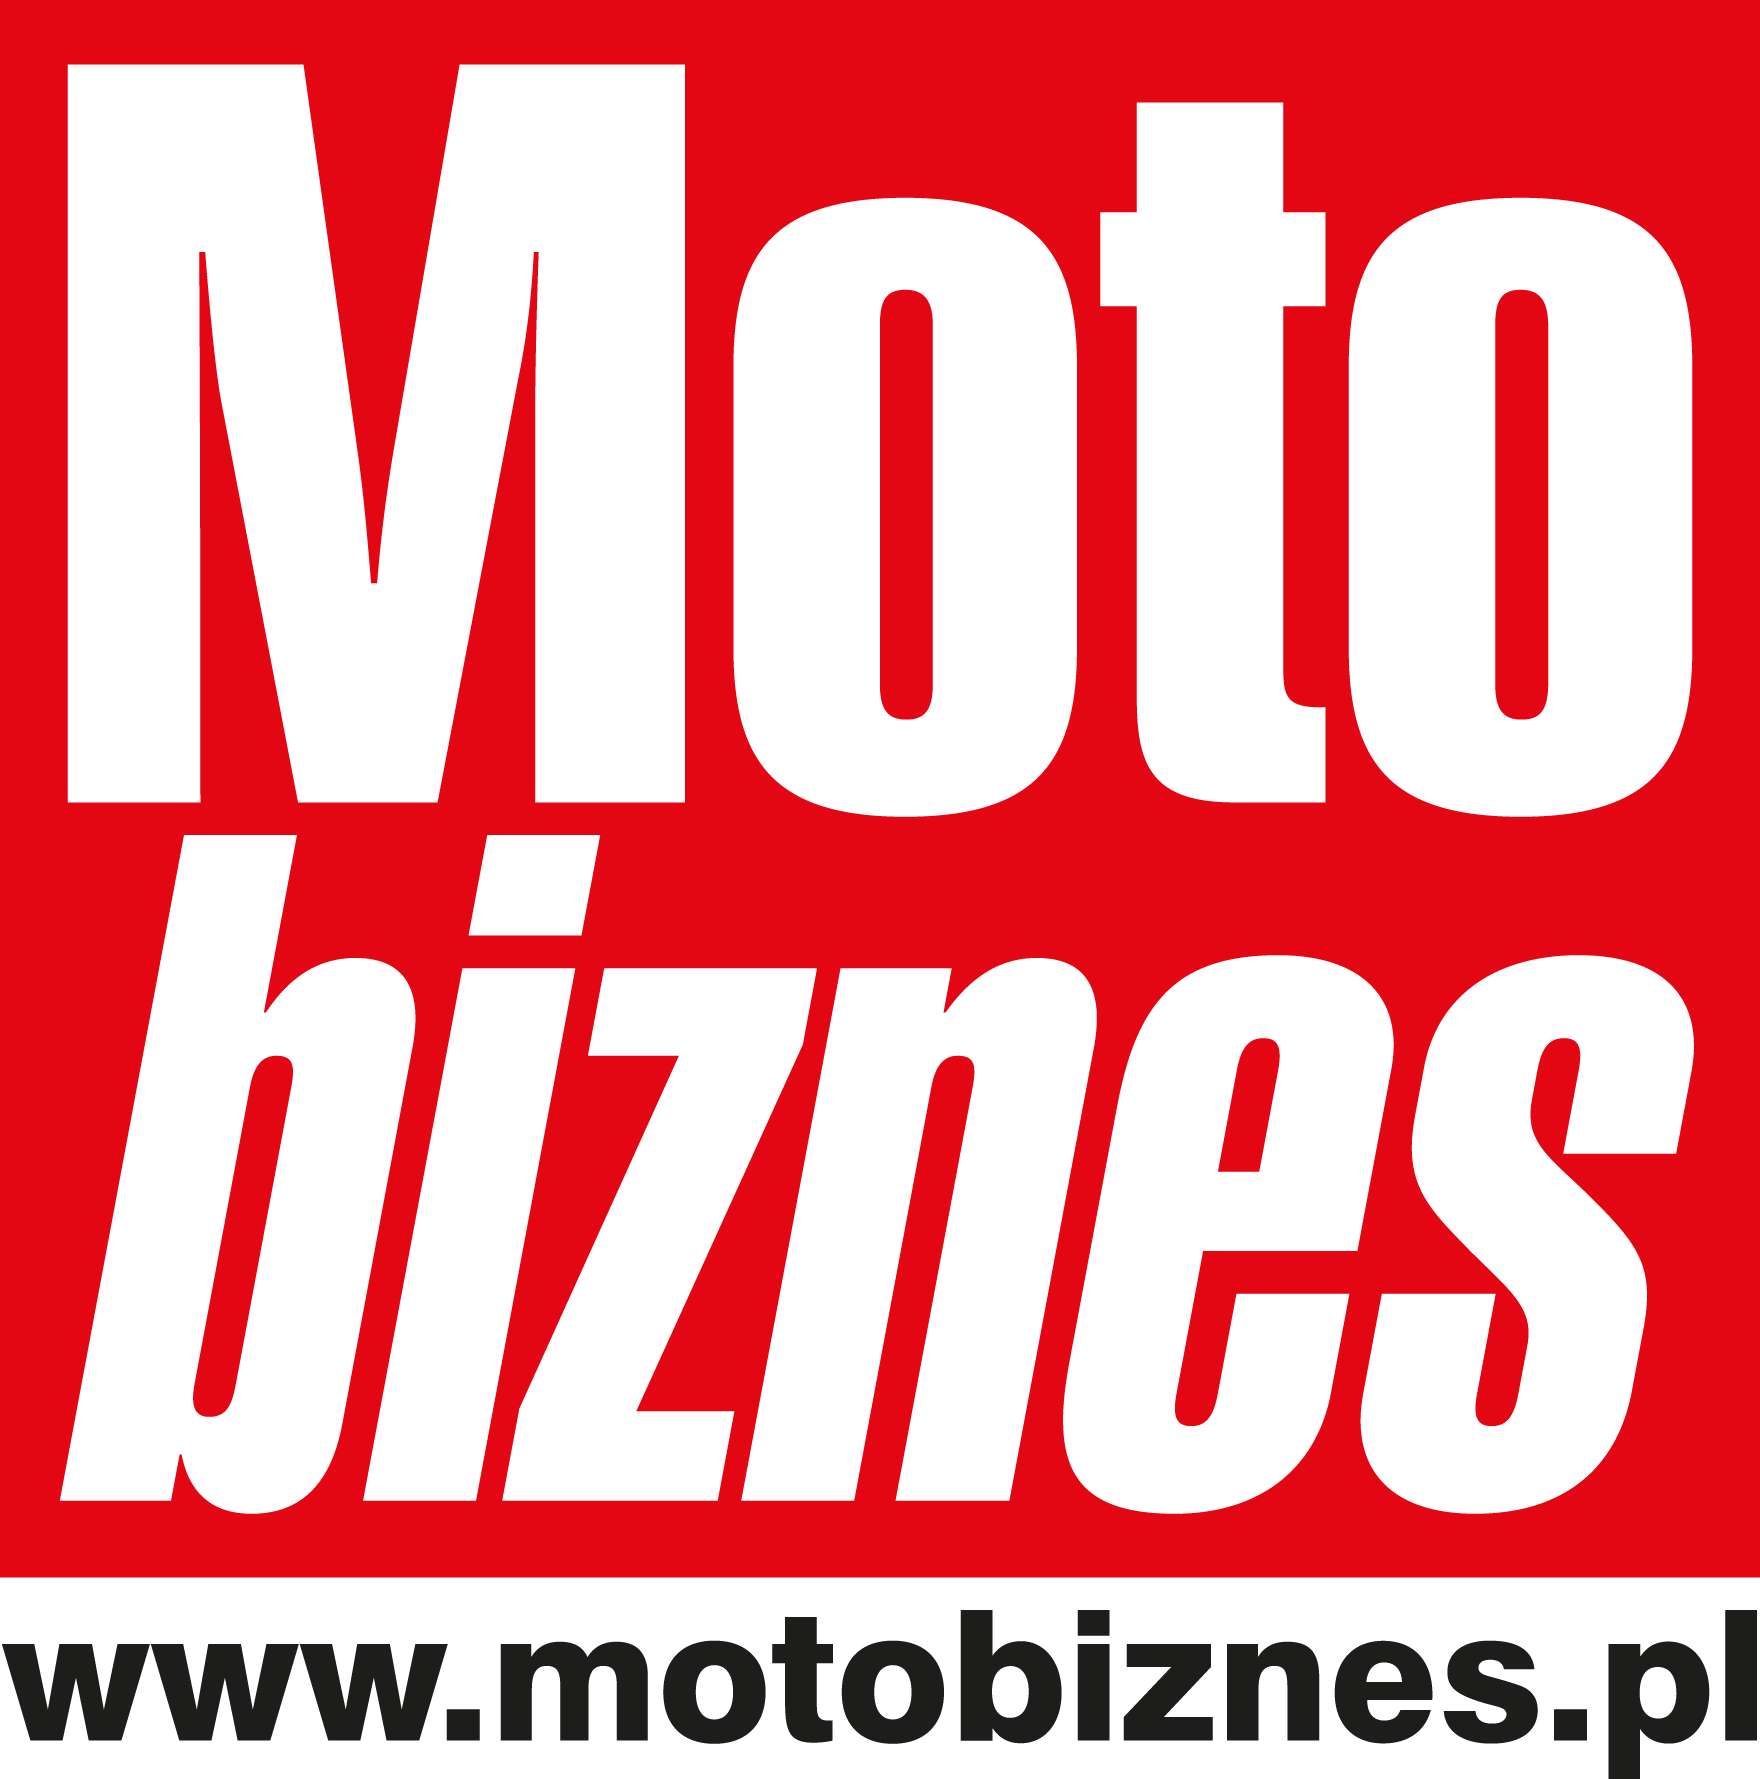 MotoBiznes